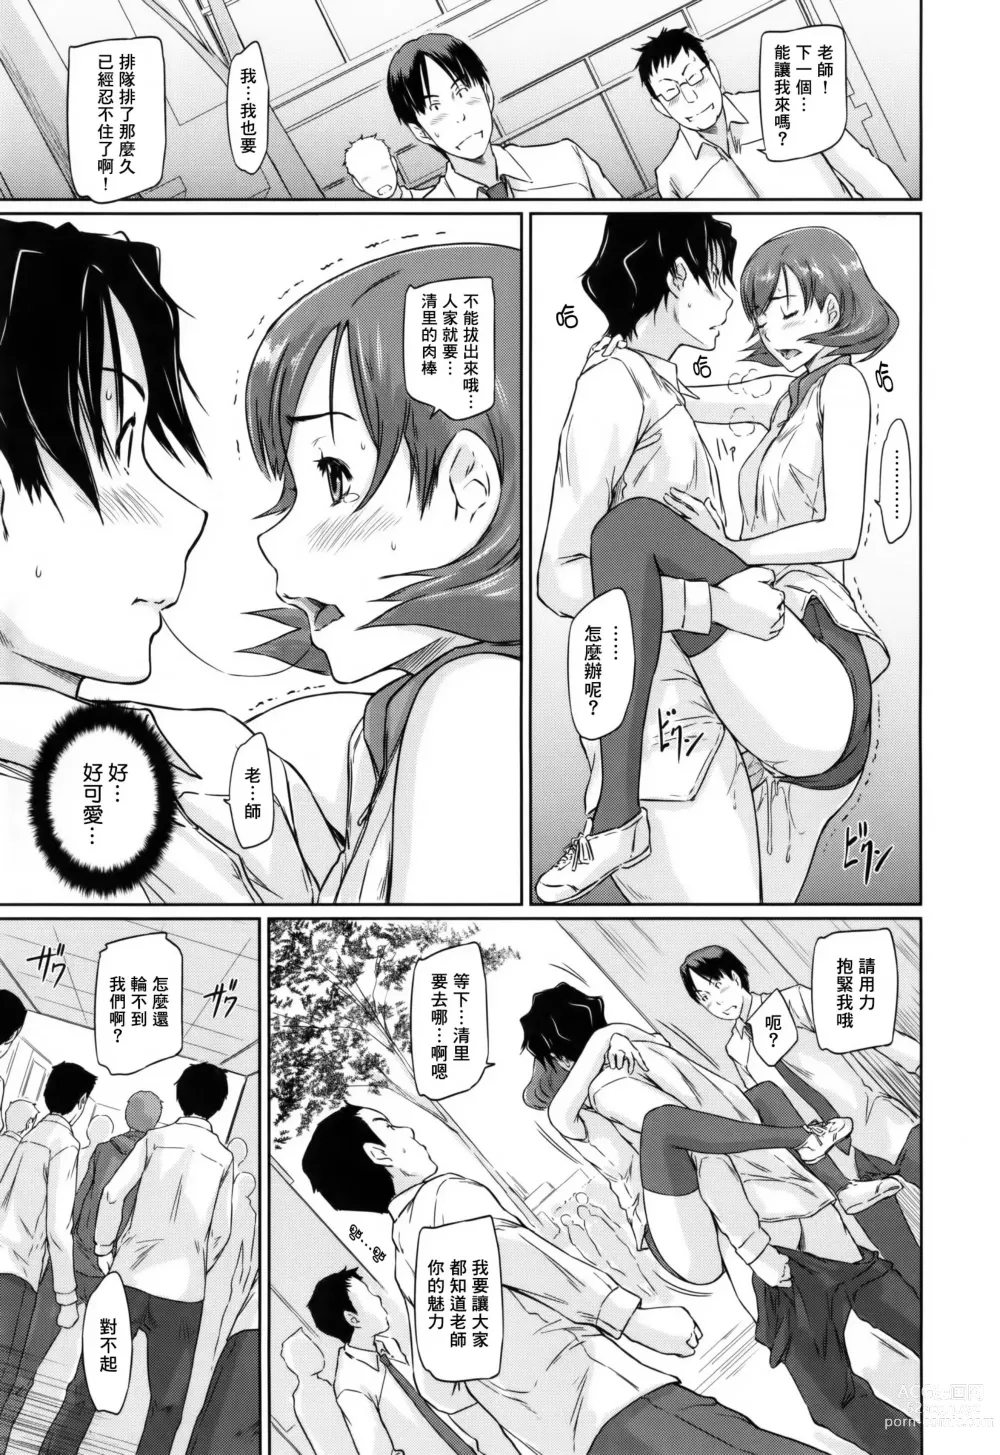 Page 209 of manga Suki ni Nattara Icchokusen!